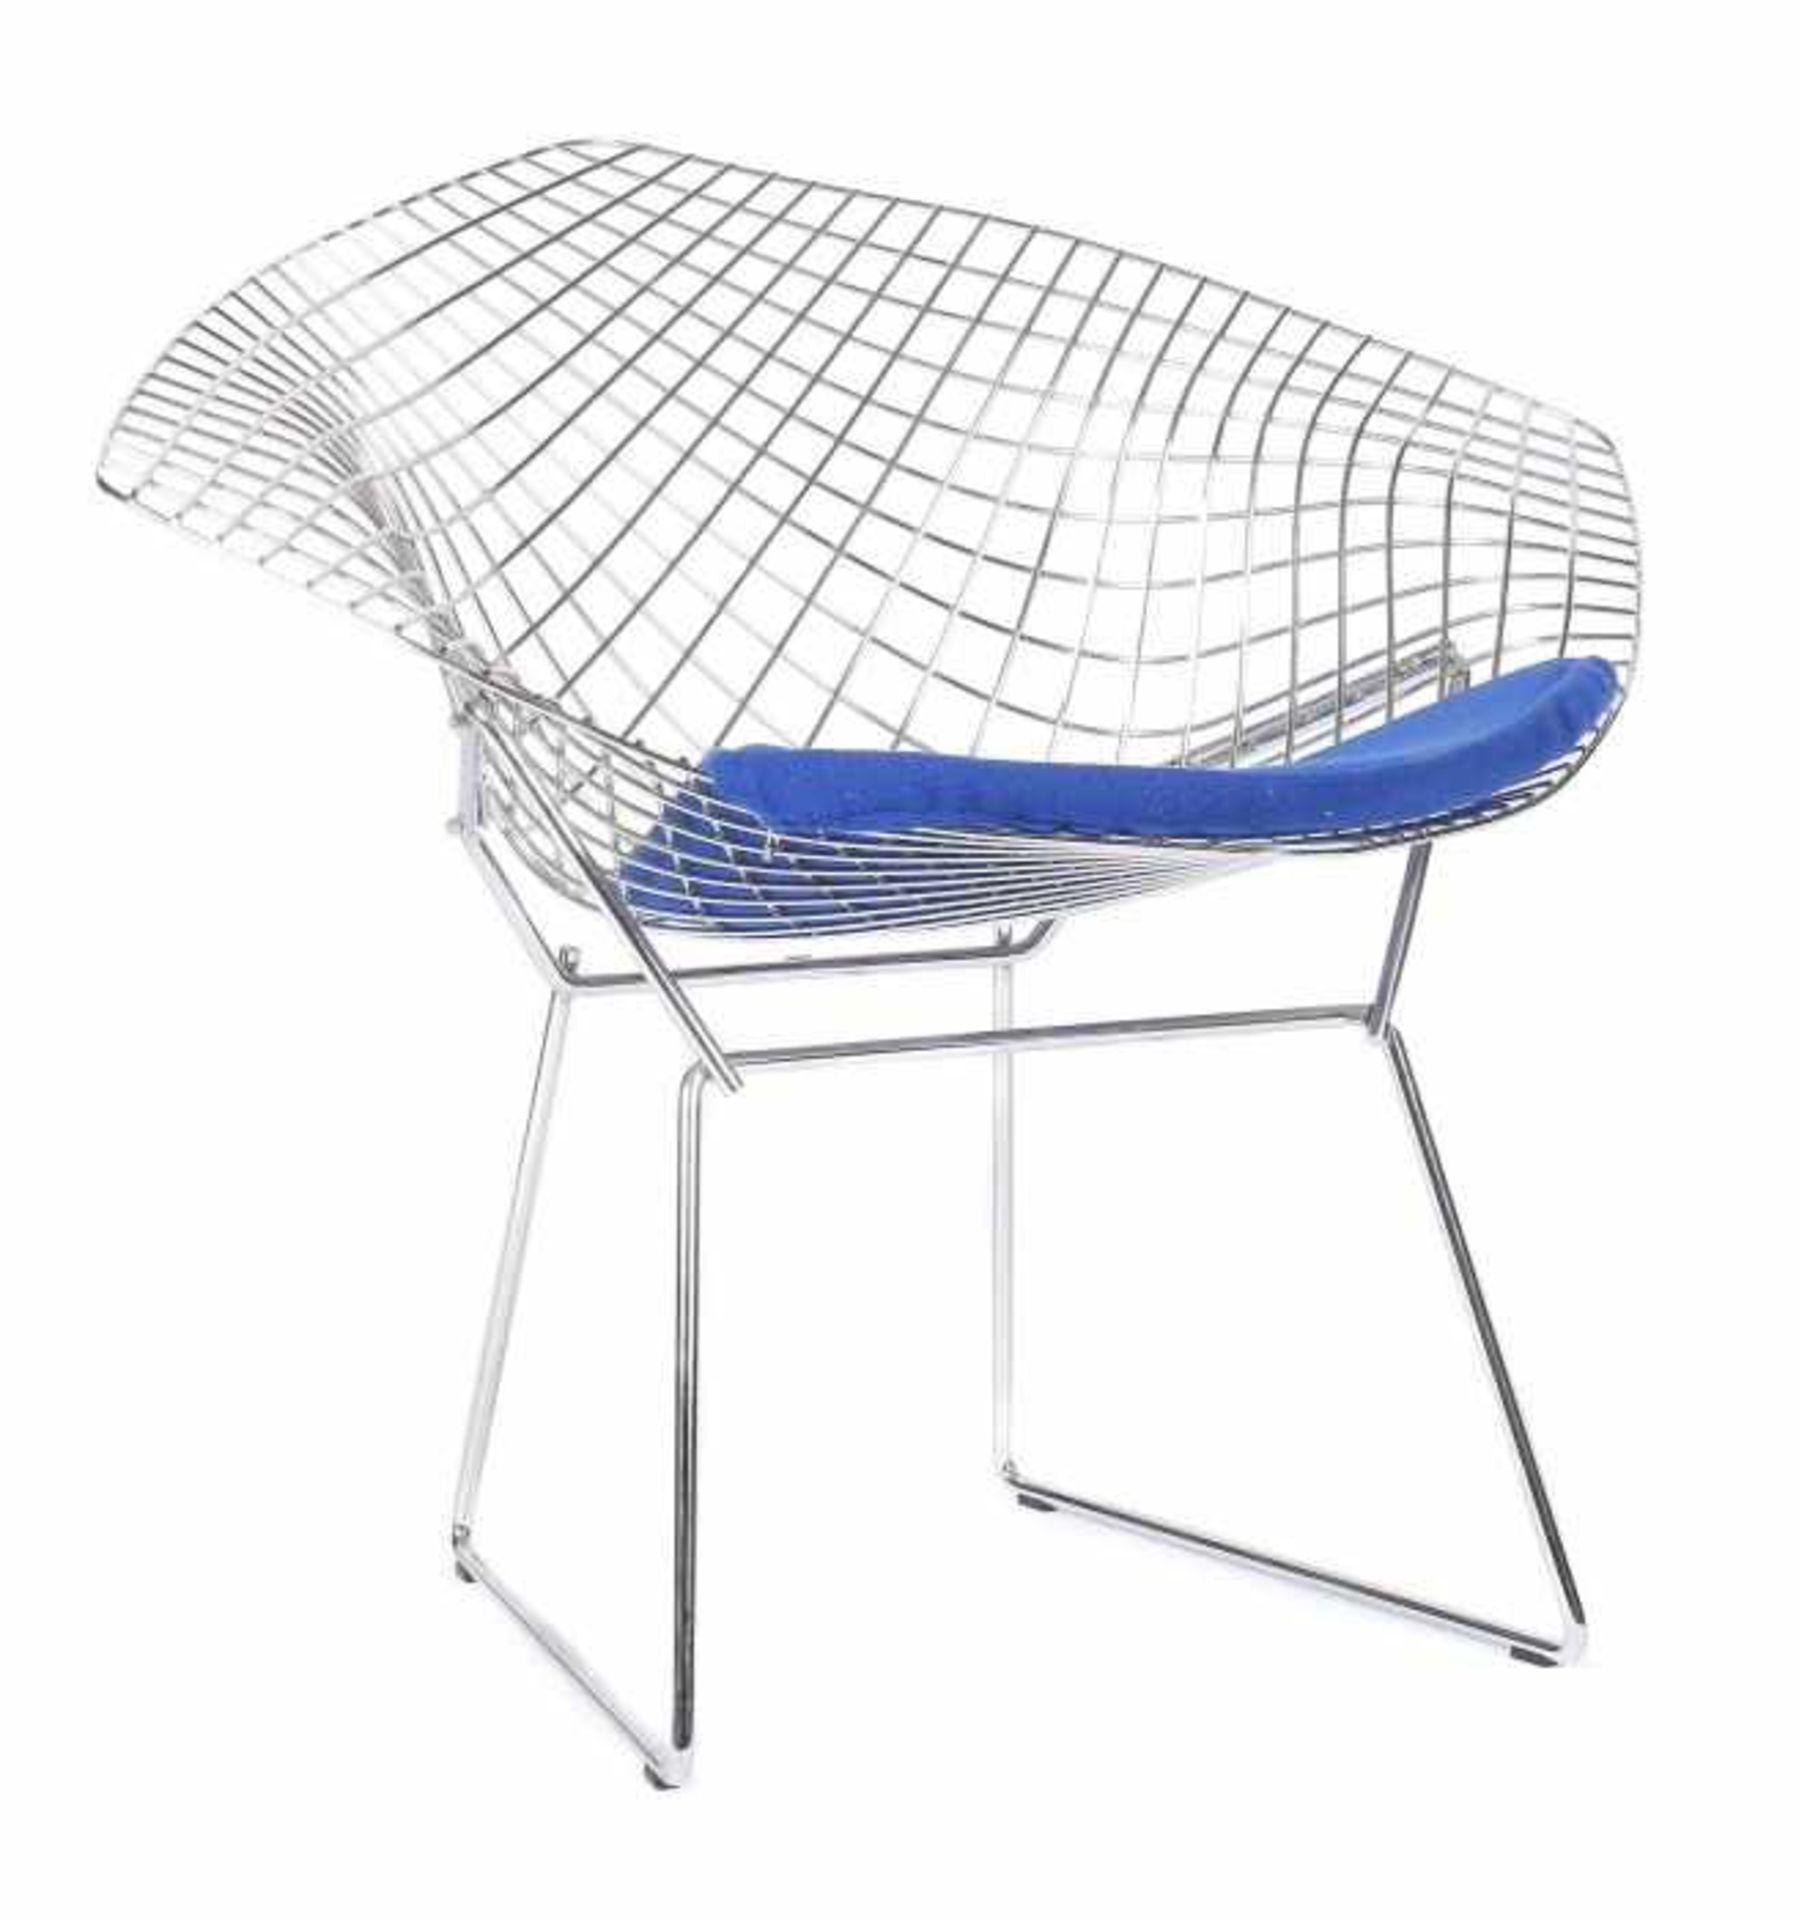 Bertoia, HarrySan Lorenzo 1915 - 1978 Pennsylvania, Designer. "Diamond Chair", Entwurf: 1950/52,